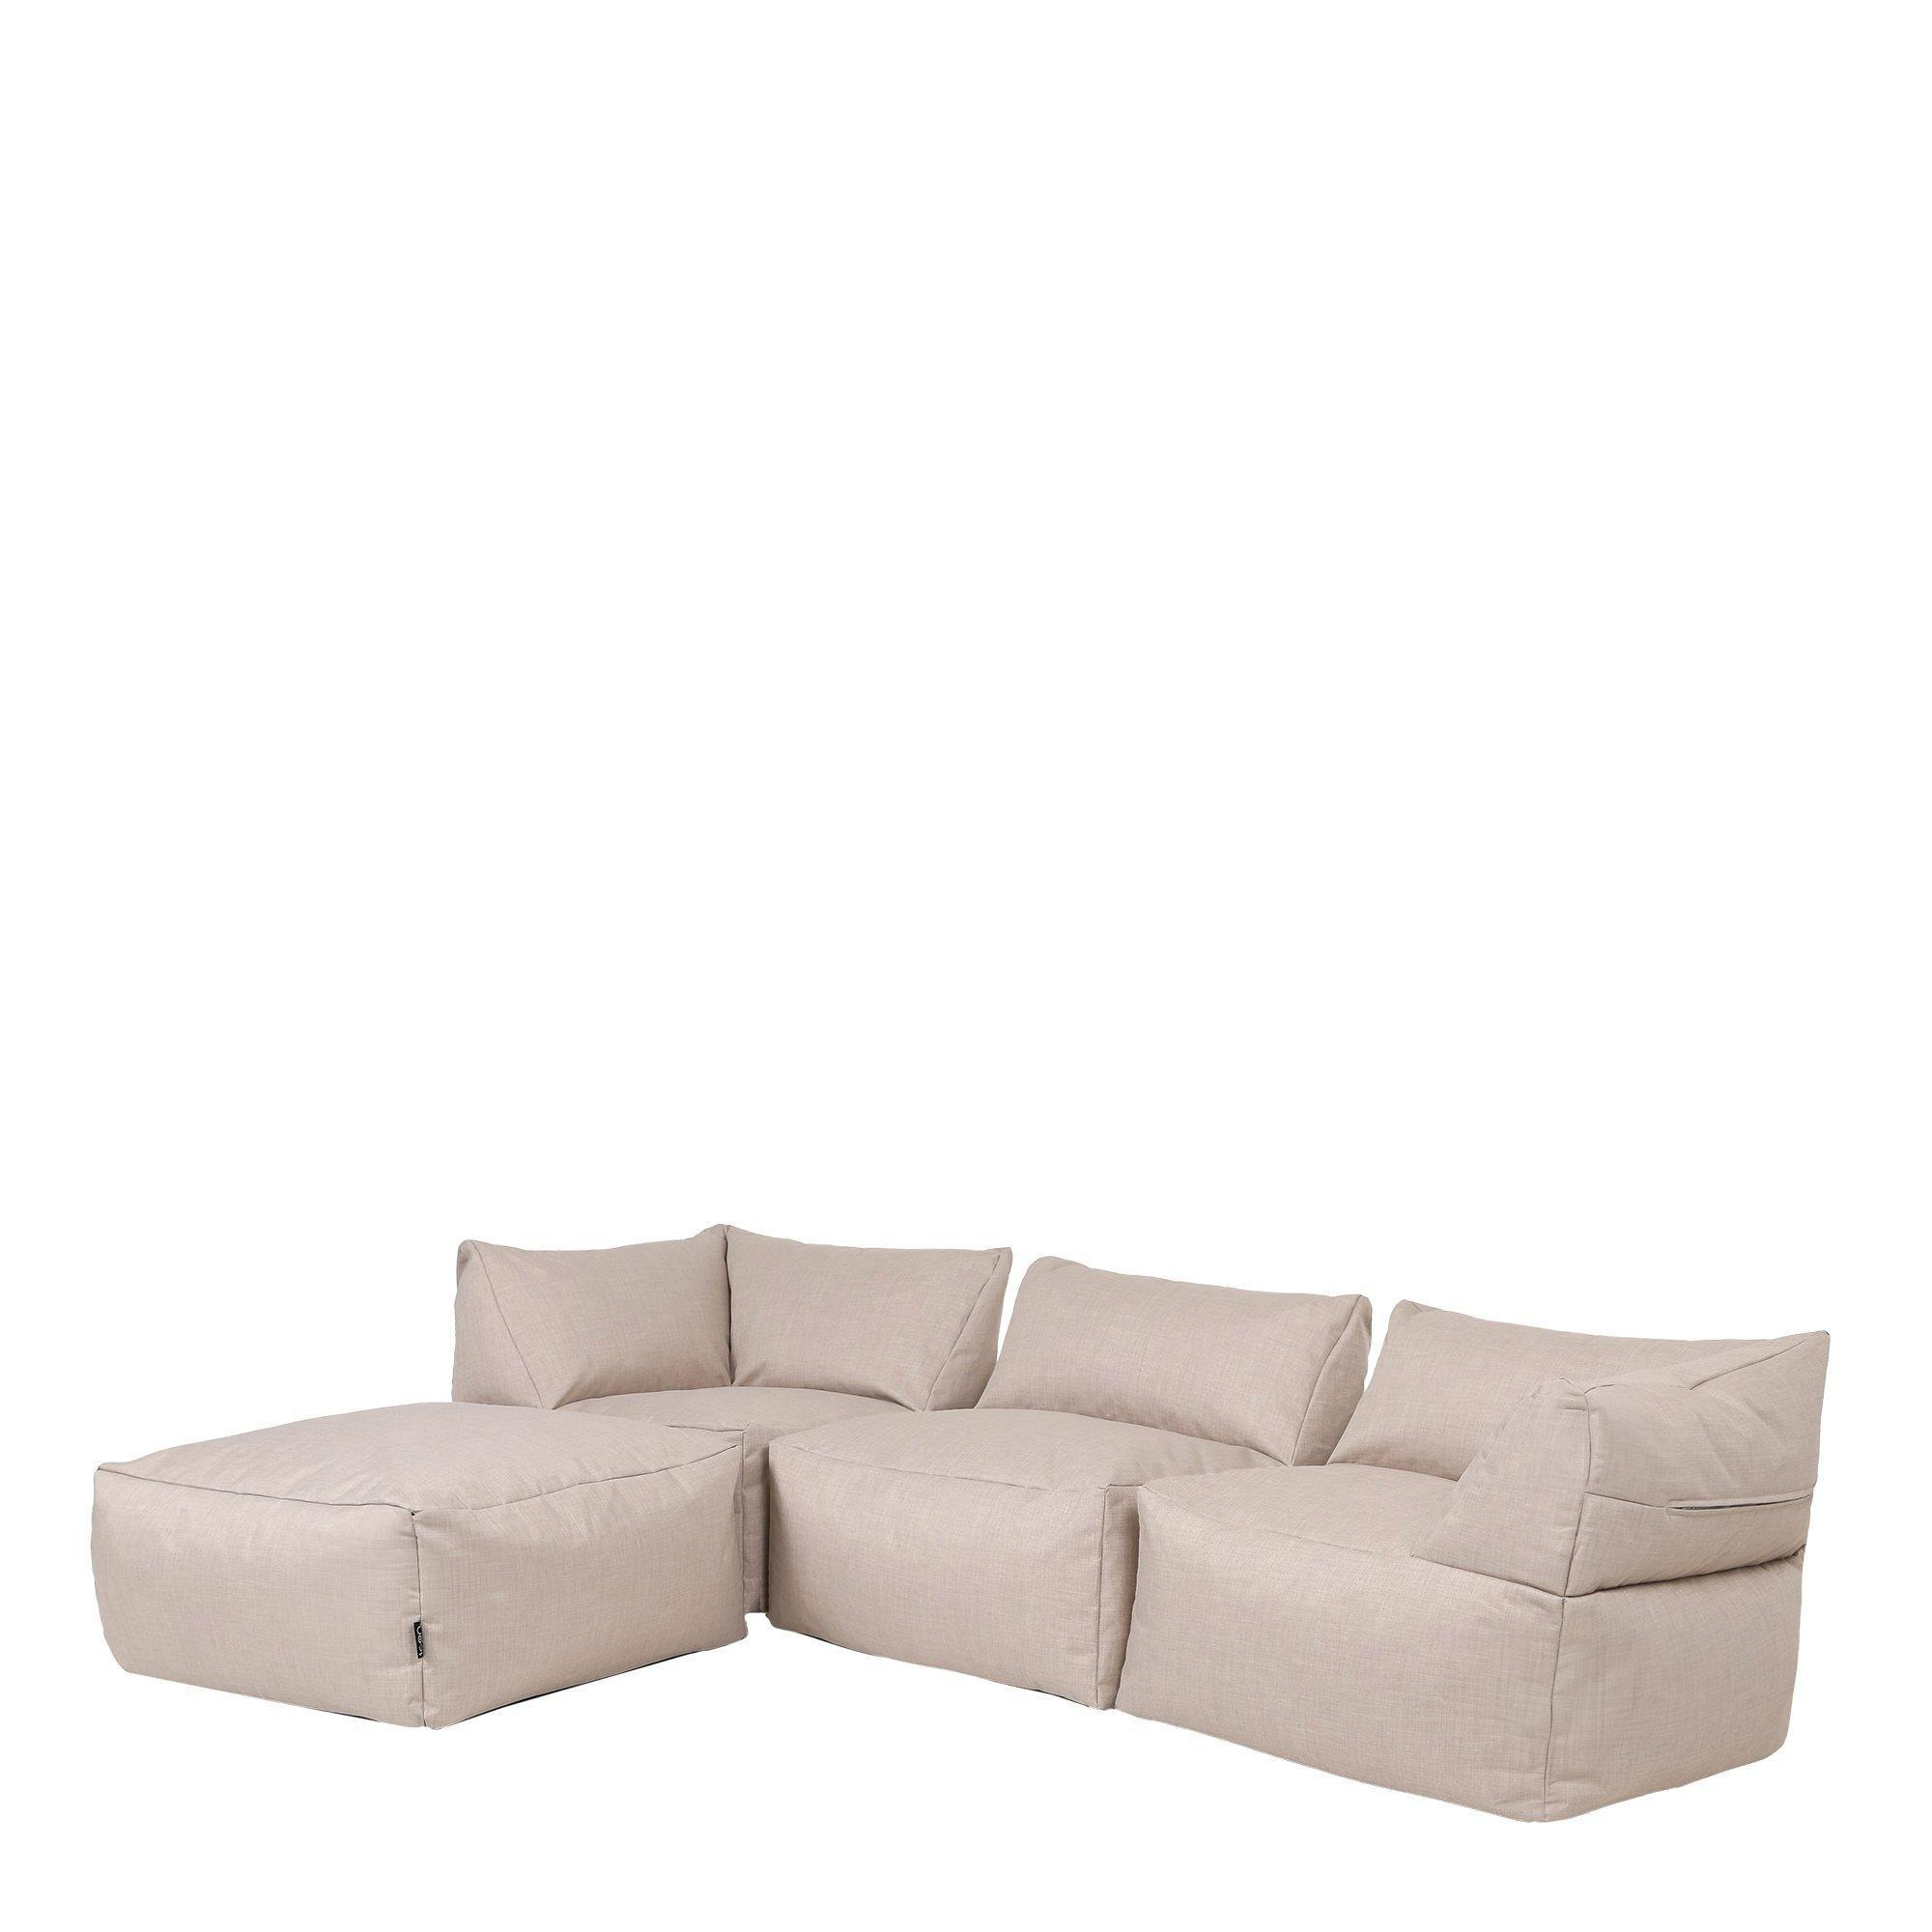 Tetra Indoor Outdoor Modular Bean Bag Grey Floor Corner Sofa -  4pc - image 1